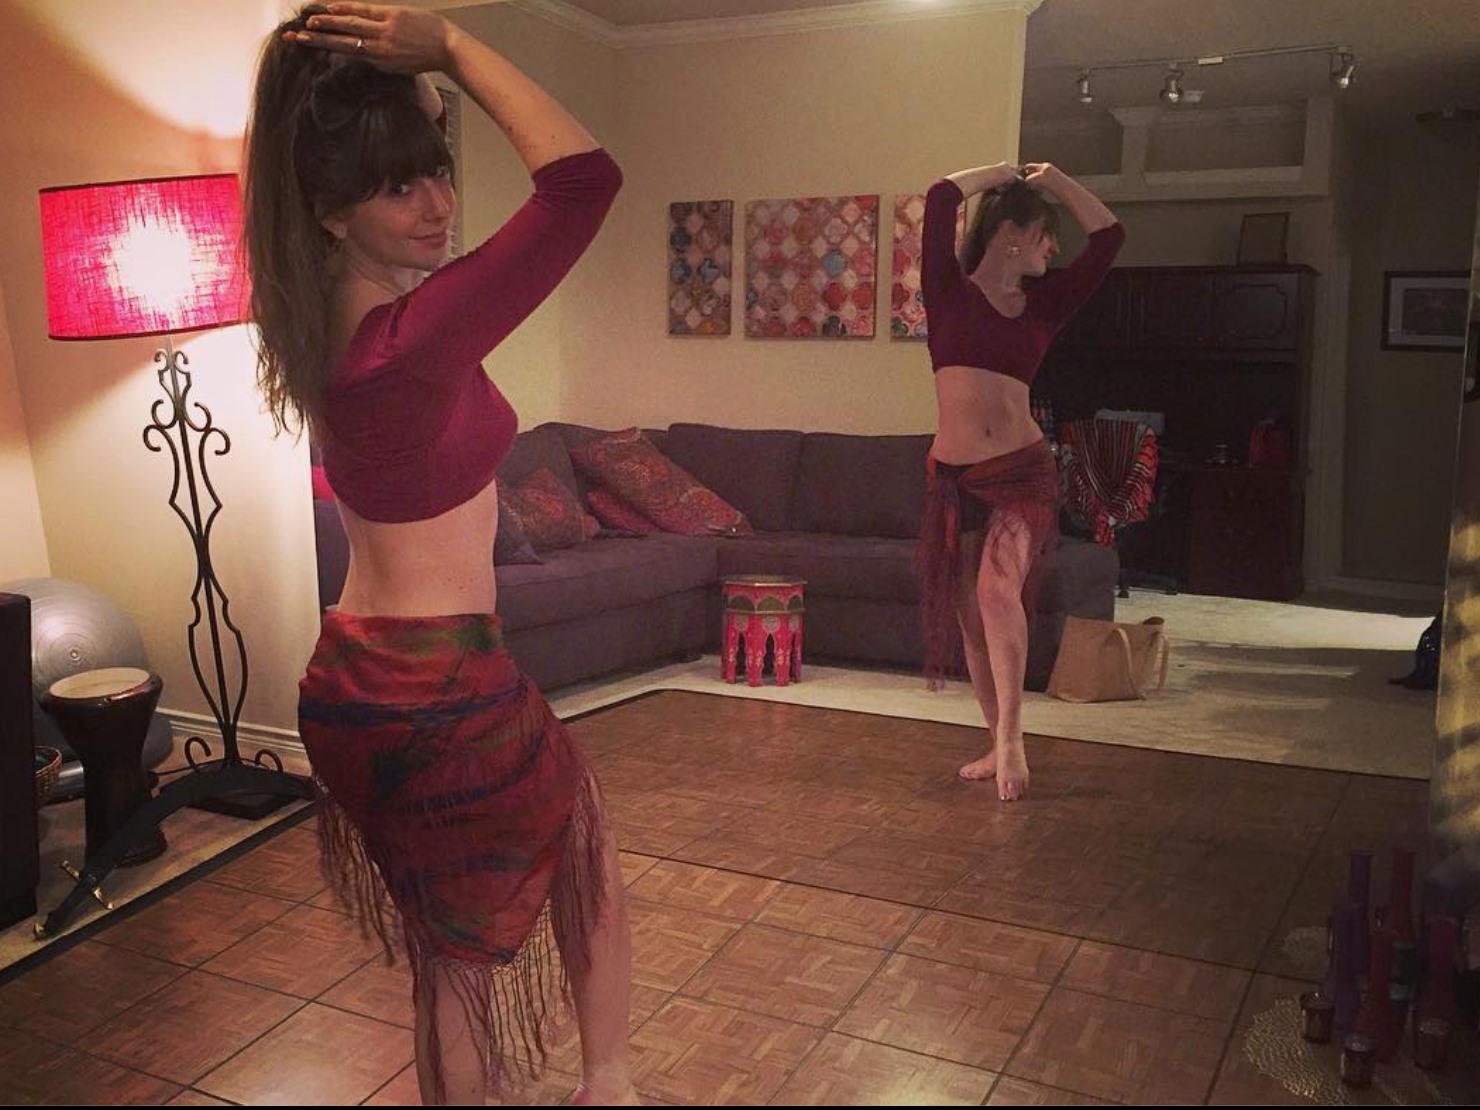 Teak style dance practice flooring at an in-home dance studio